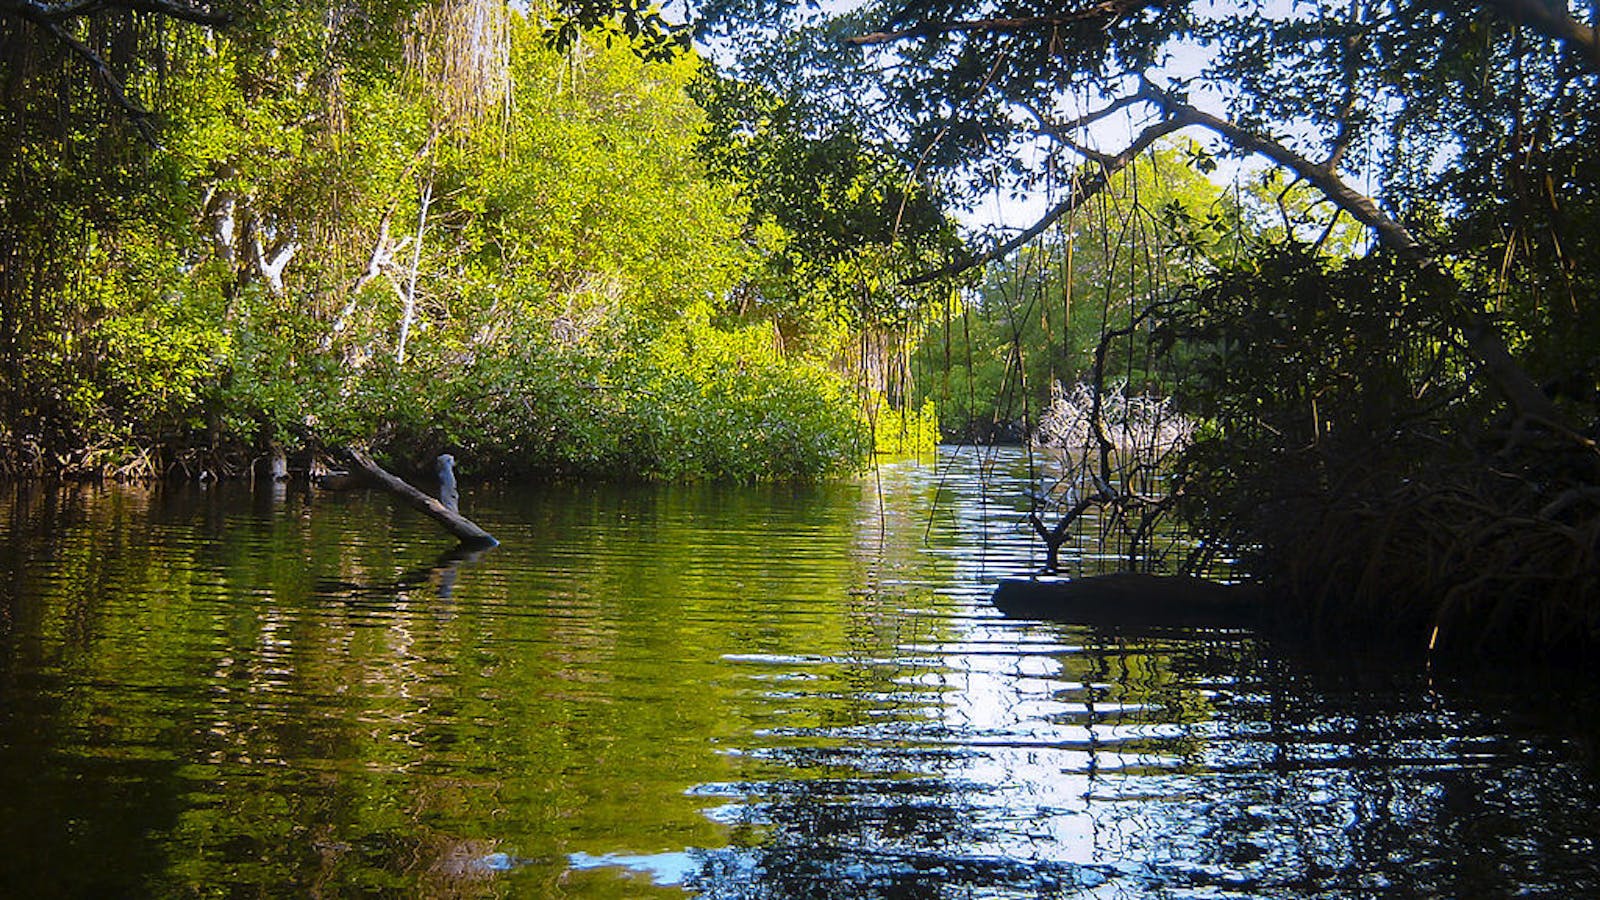 Amazon-Orinoco-Southern Caribbean Mangroves